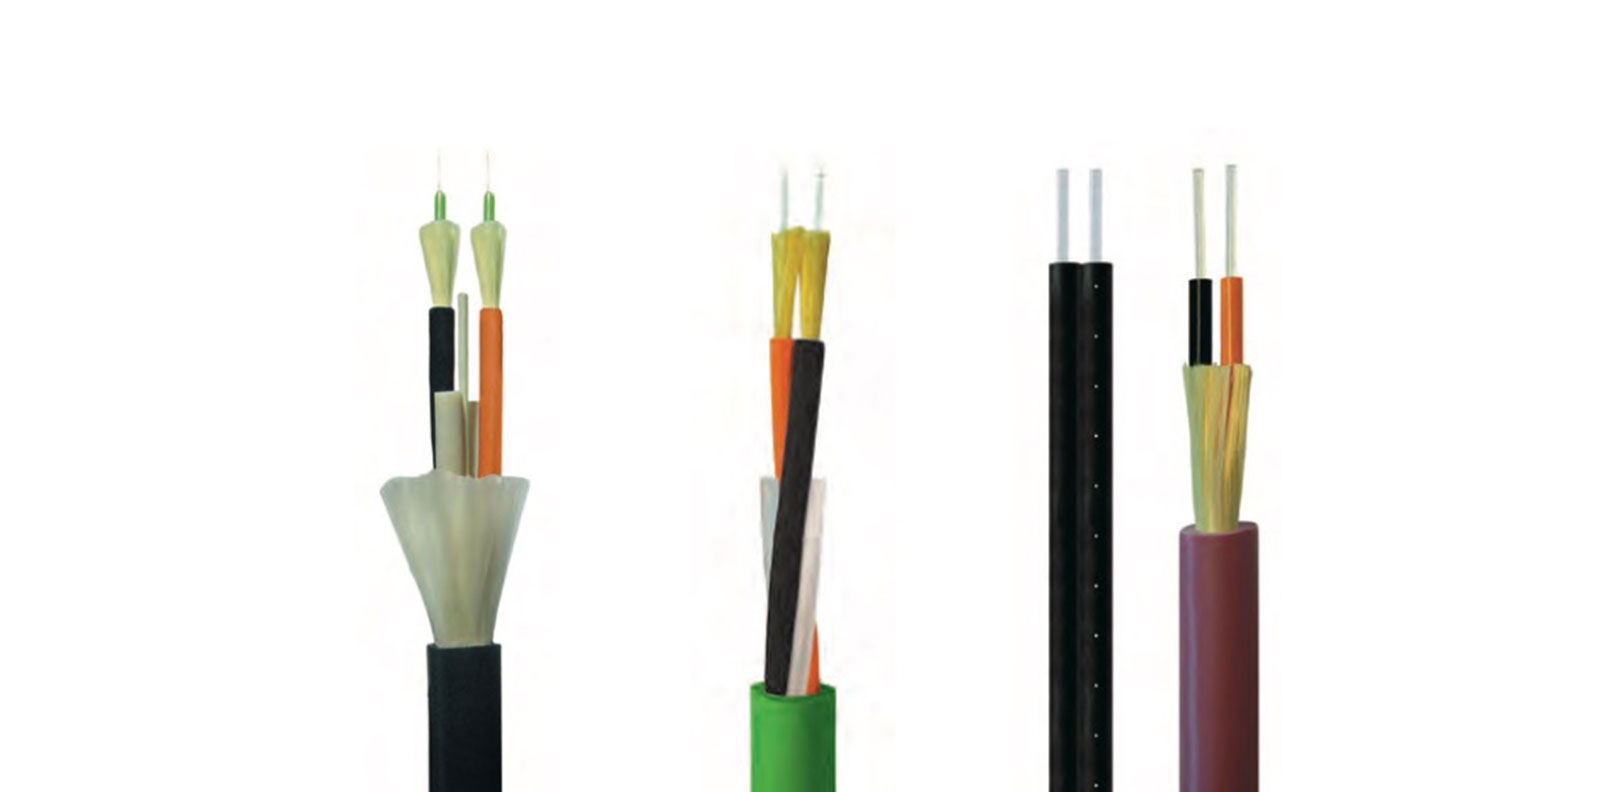 Bus cables in Optical Fibre